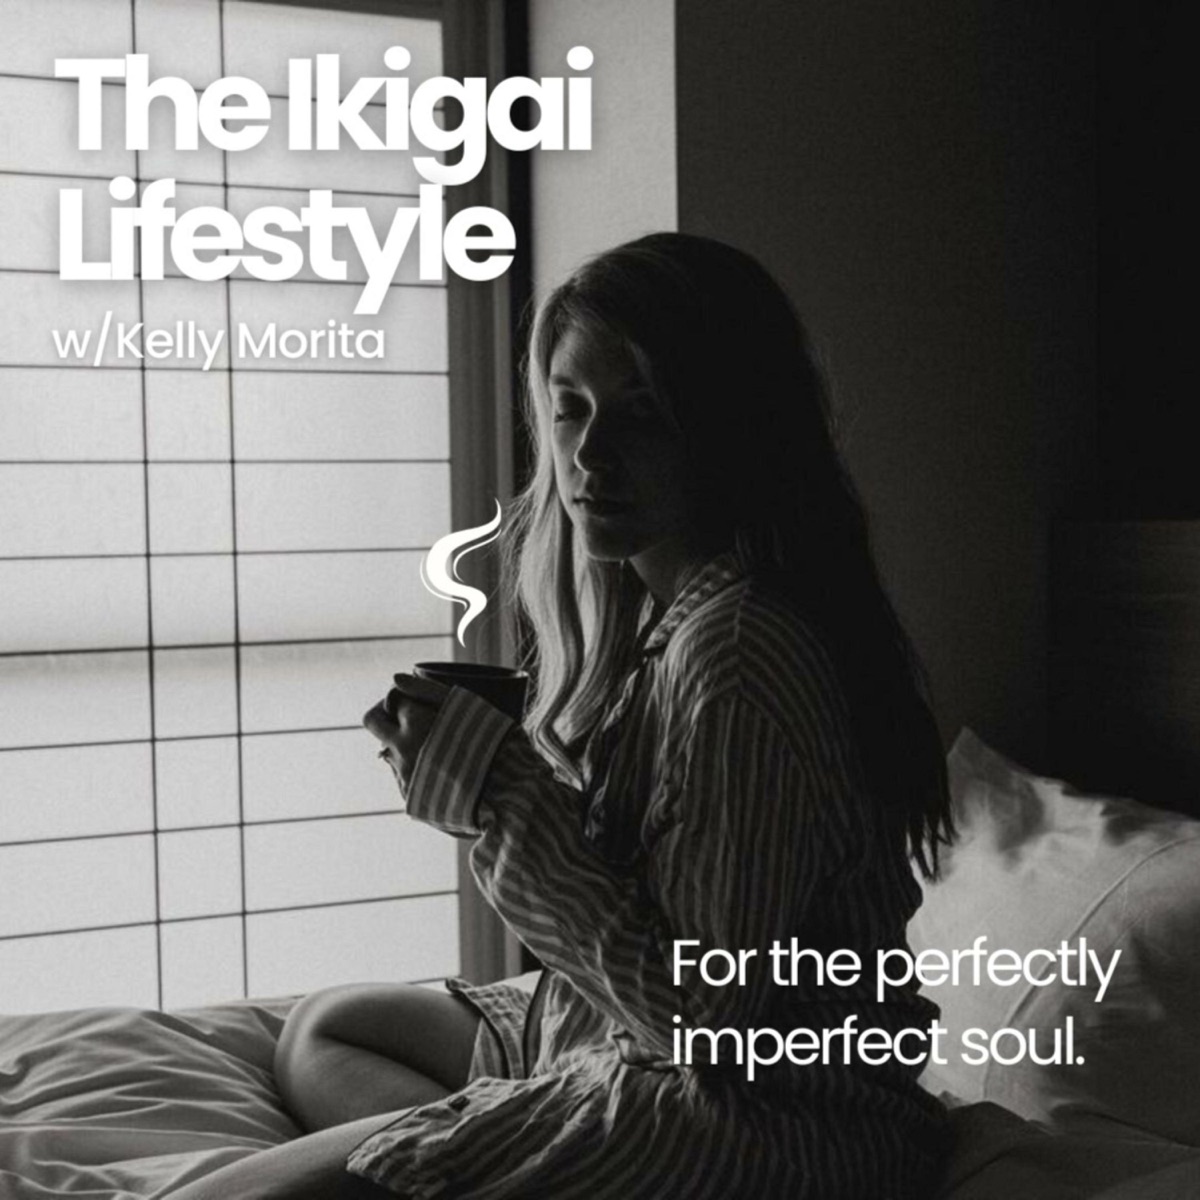 Podcast "The Fulltime Ikigai" episode with guest Saori Okada, Founder of Mogami Wellness 